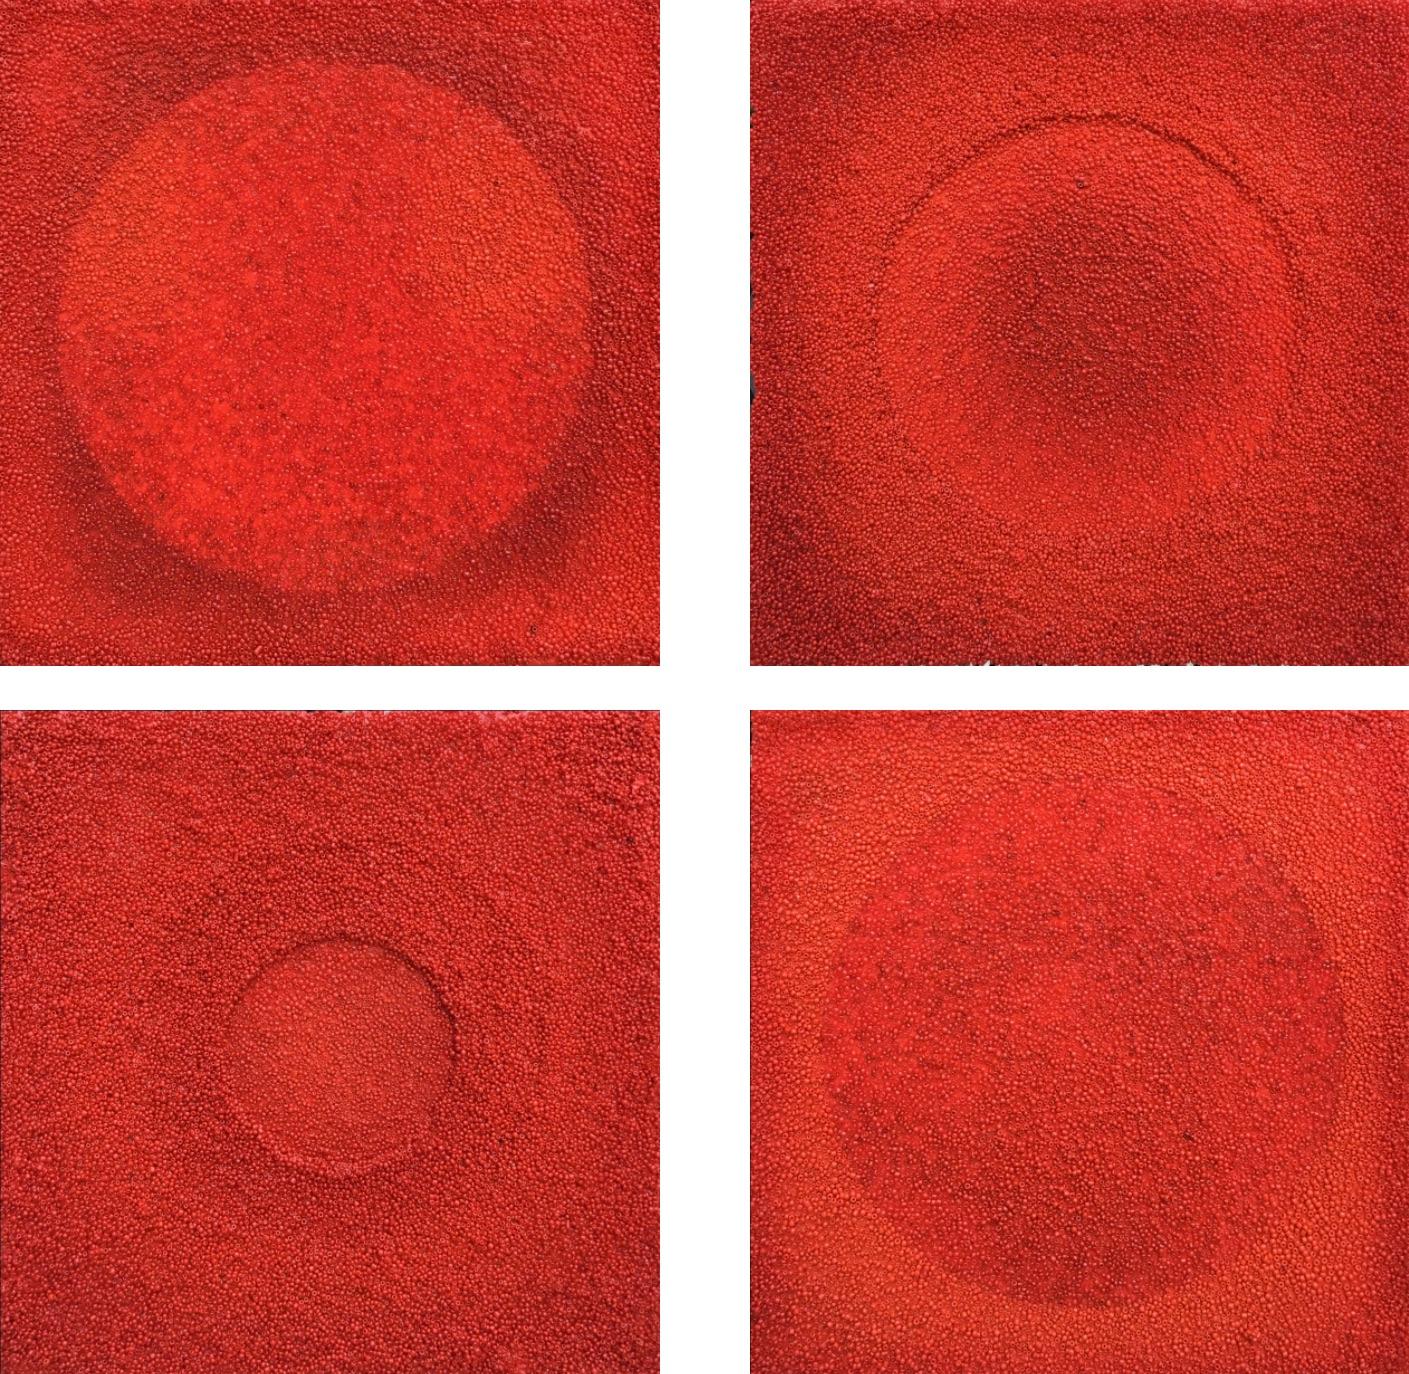 Tantra series: suite of 4 red minimalist mandala wall sculptures / paintings